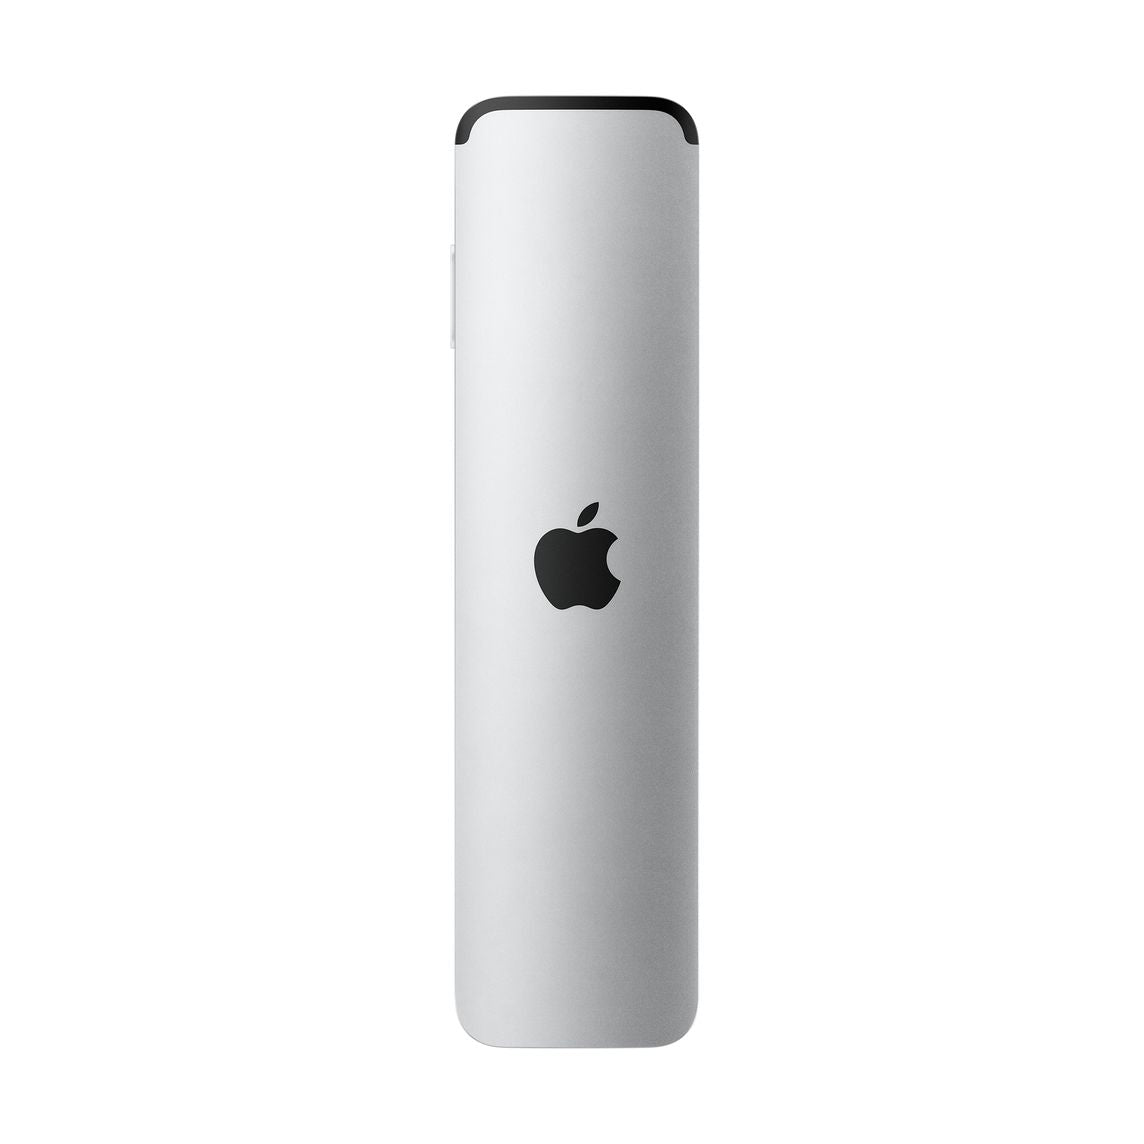 Apple Siri Remote (2nd generation)